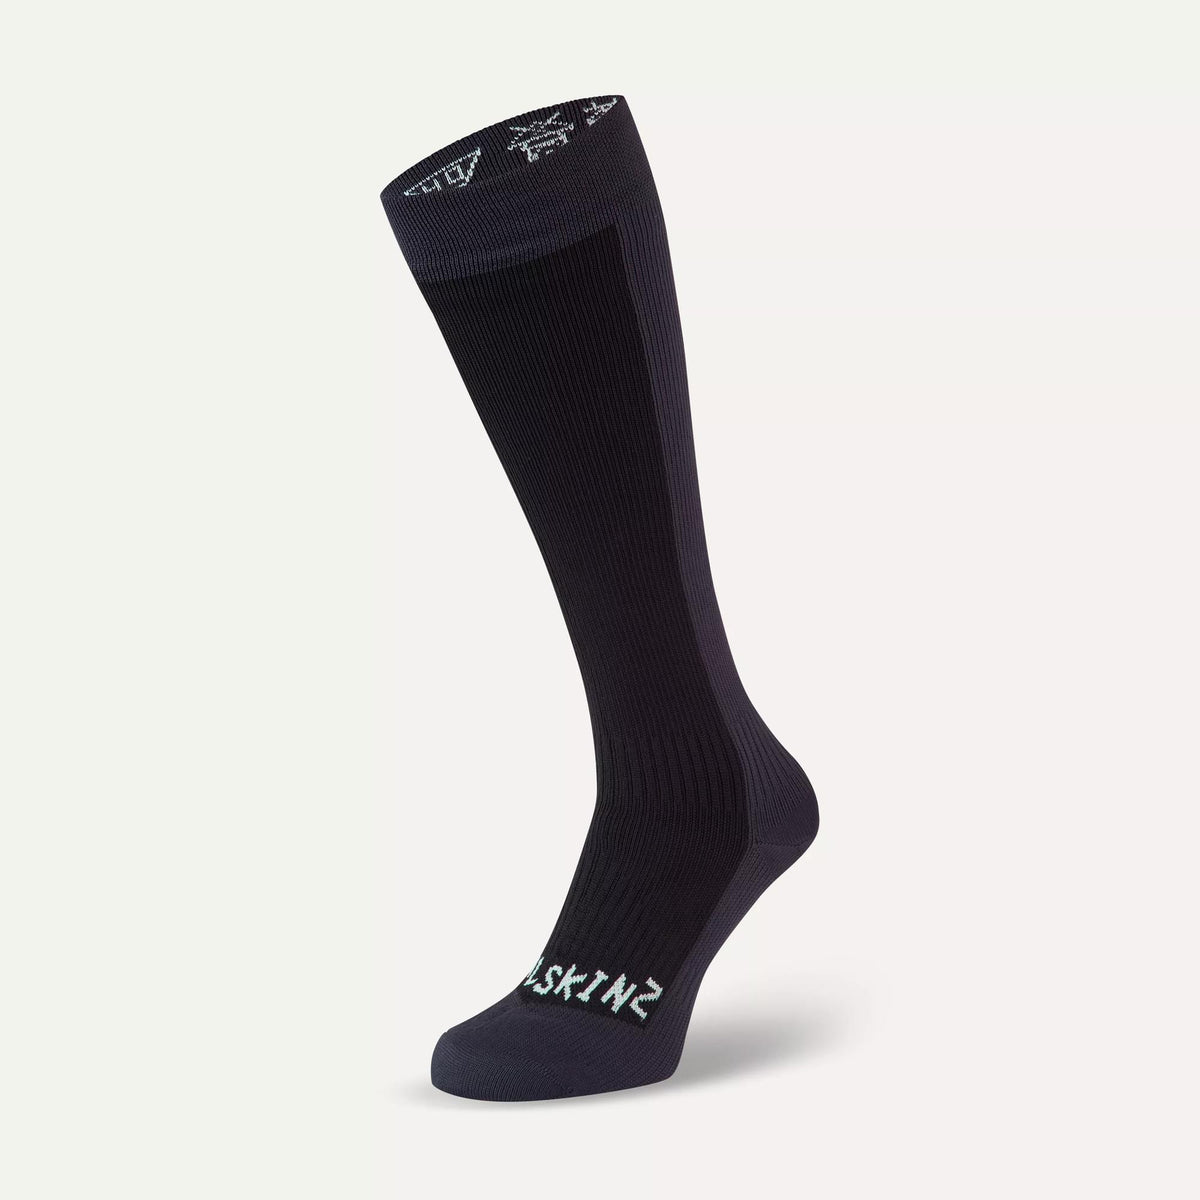 New British Army Issue Sealskinz Knee Length Foul Weather Socks